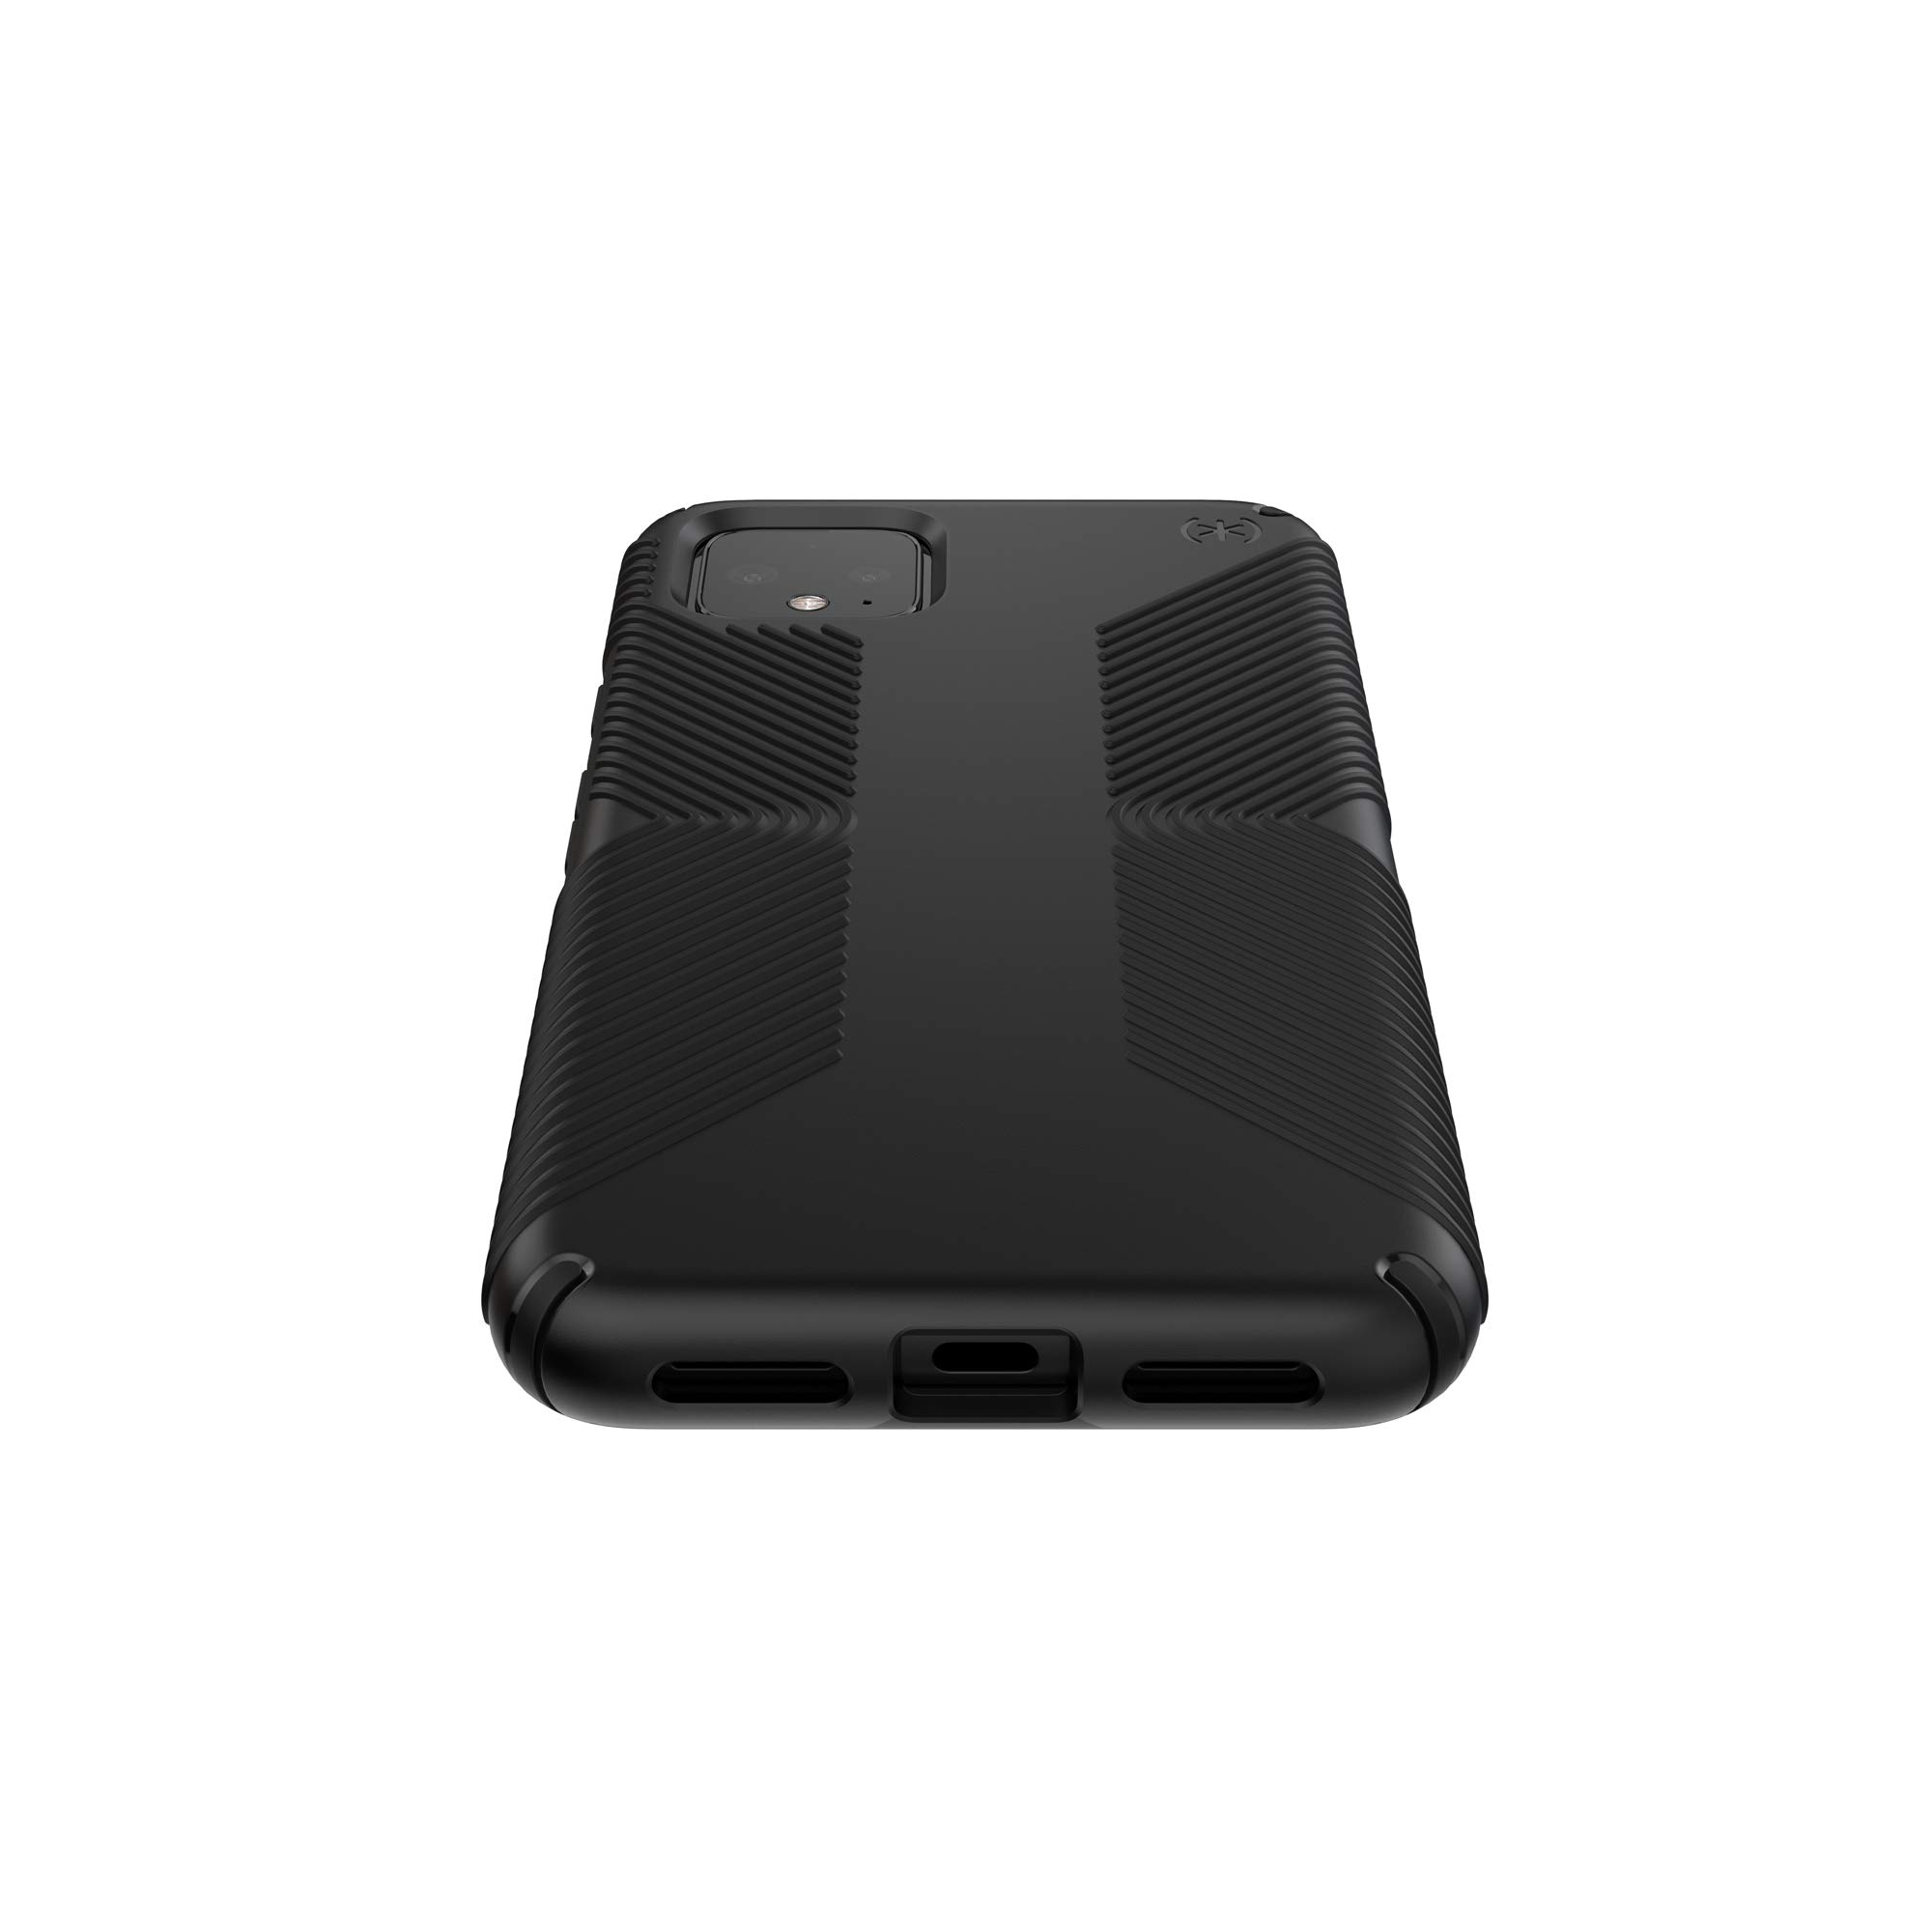 Speck Presidio Grip Google Pixel 4 XL Case, Black/Black (131862-1050)